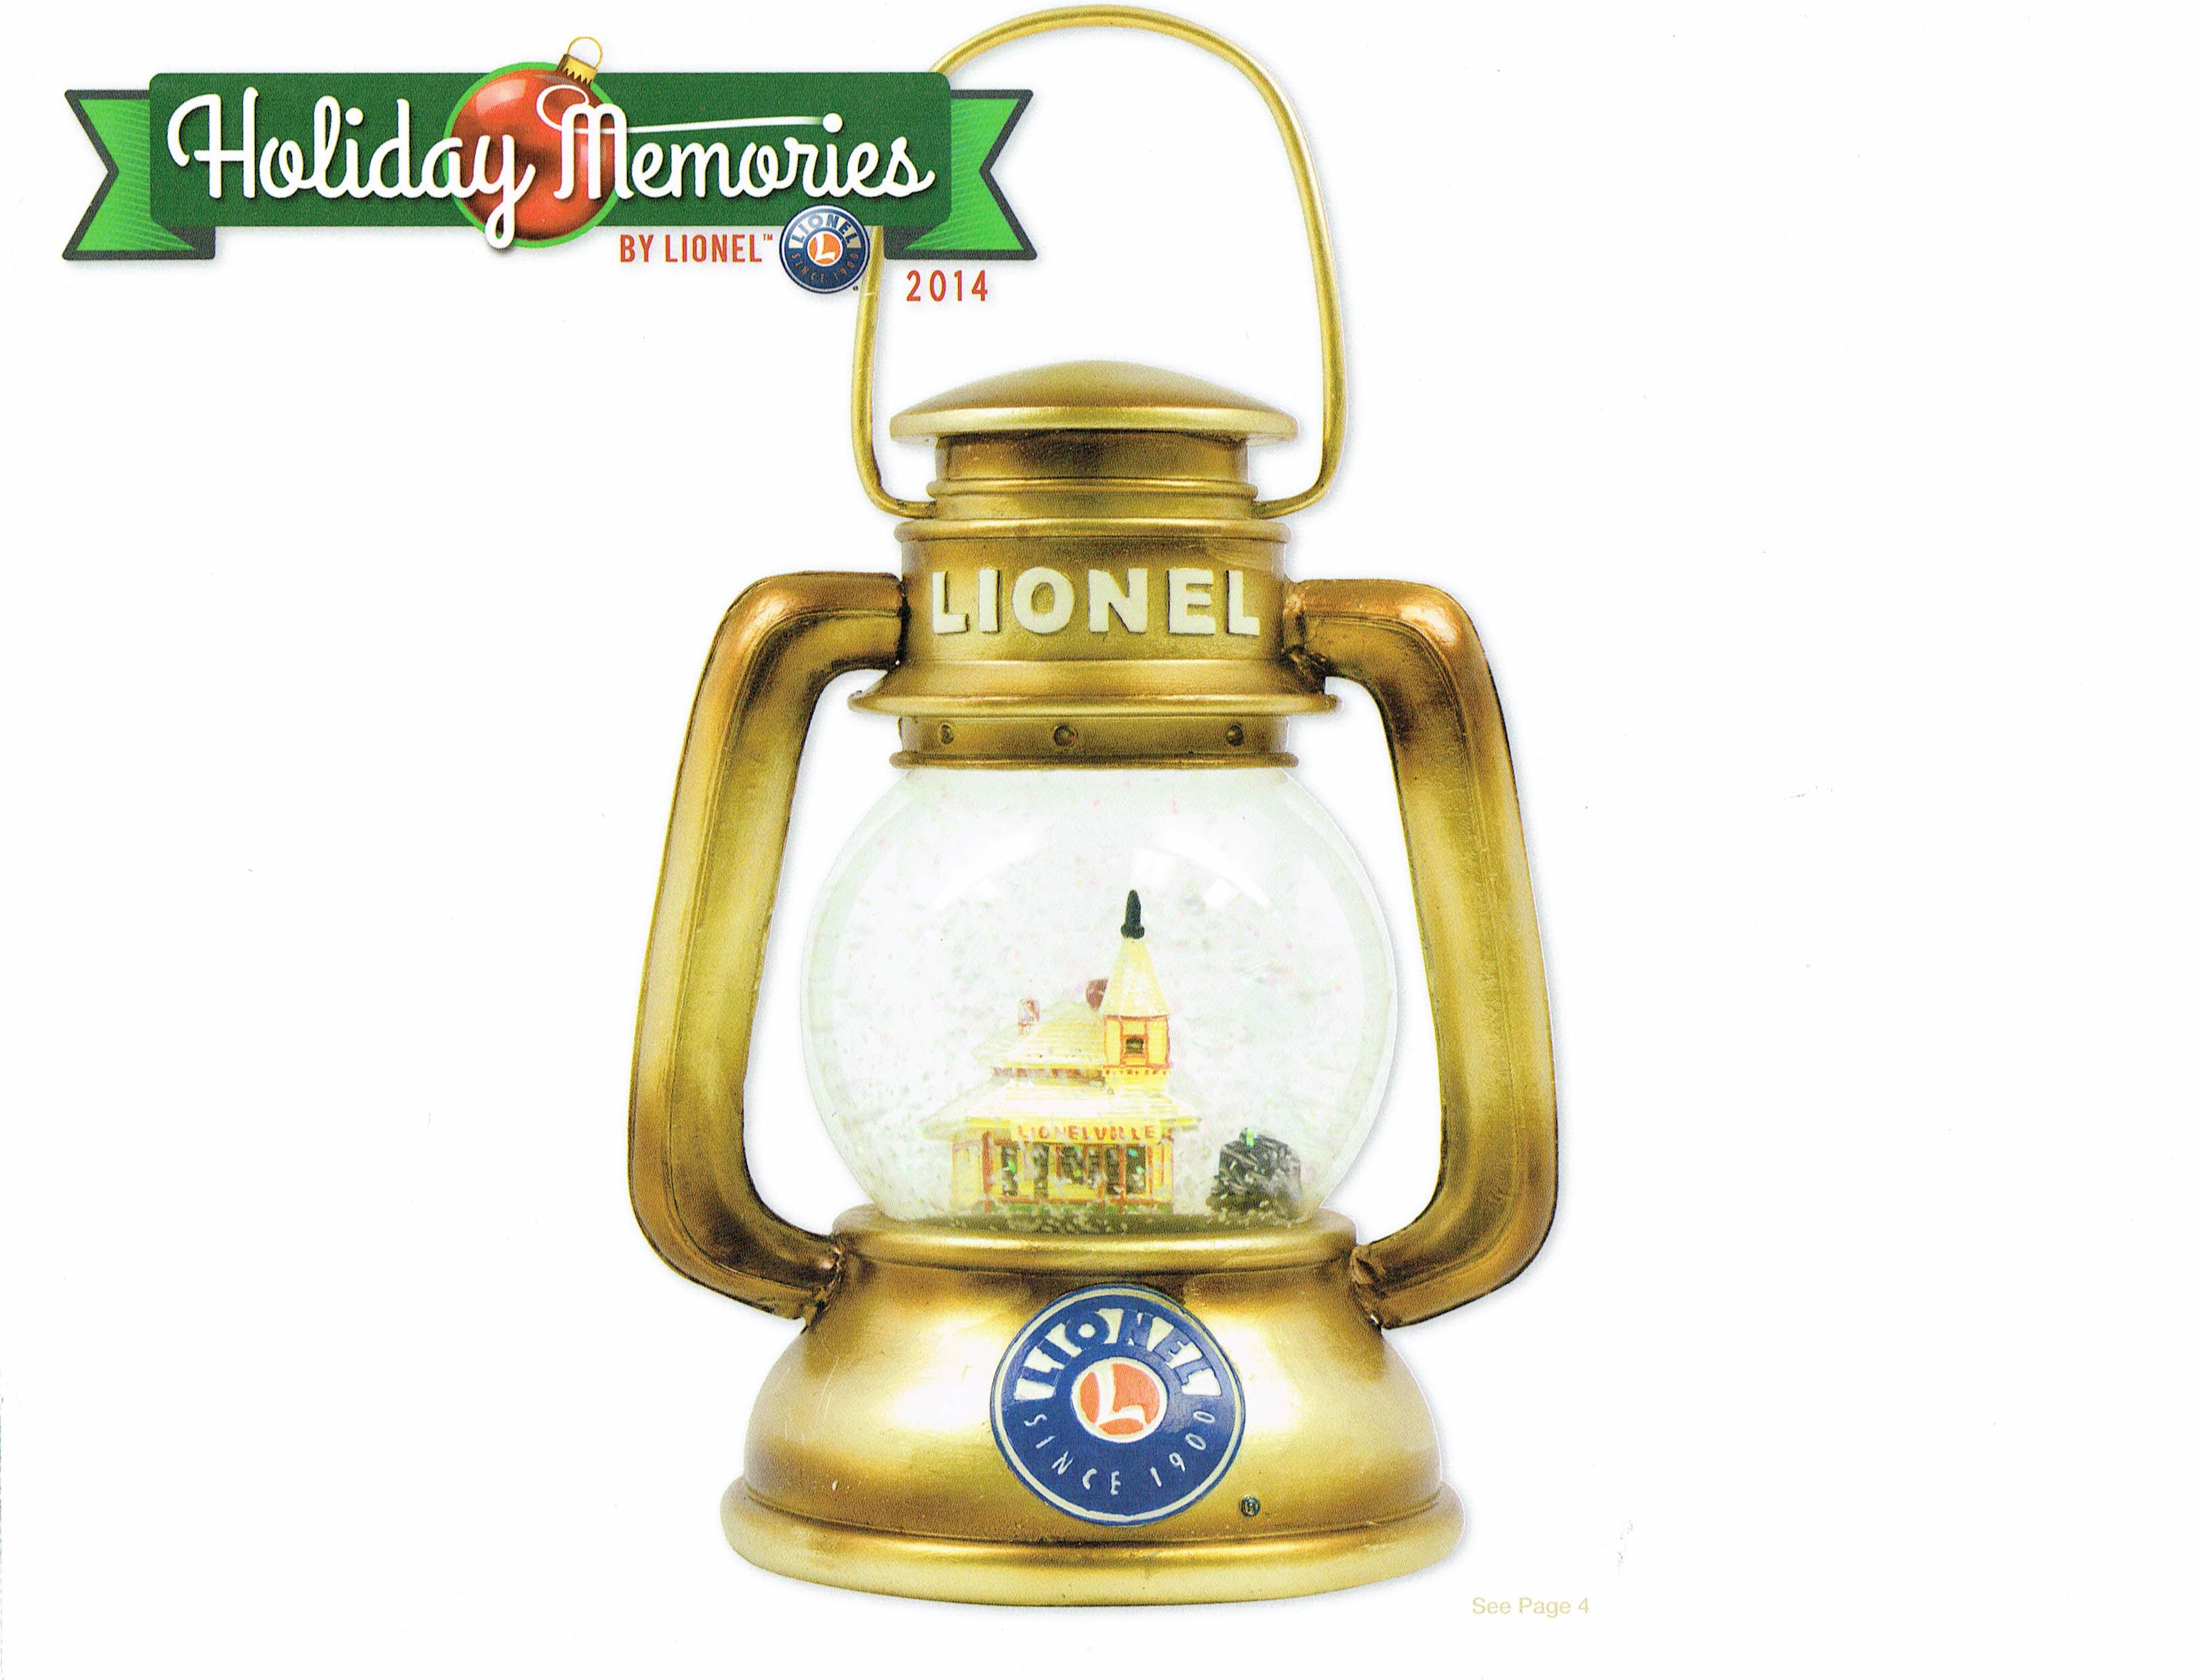 Lionel 2014 Holiday Memories Catalog image